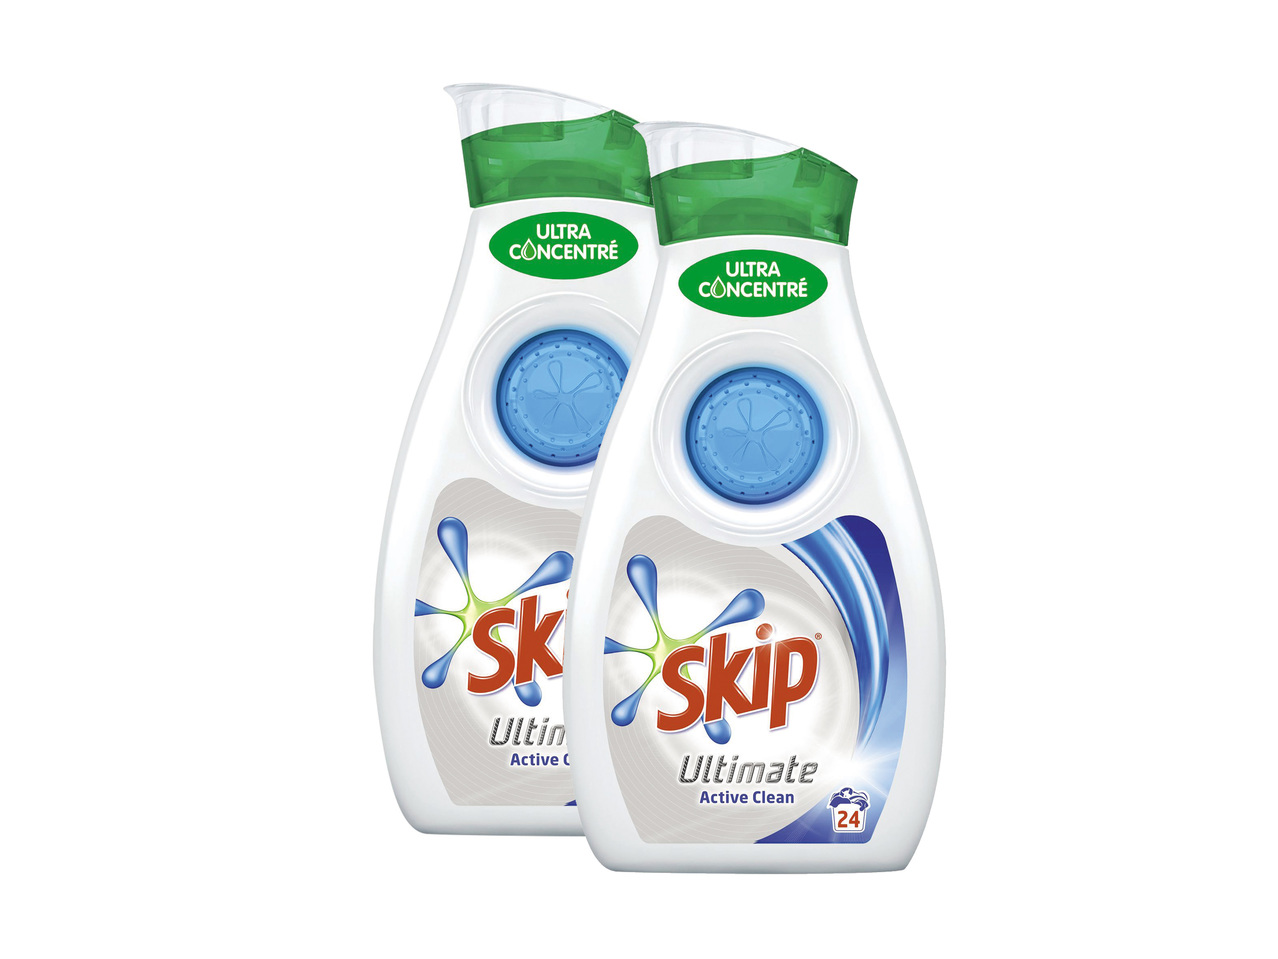 Skip Active Clean lessive liquide